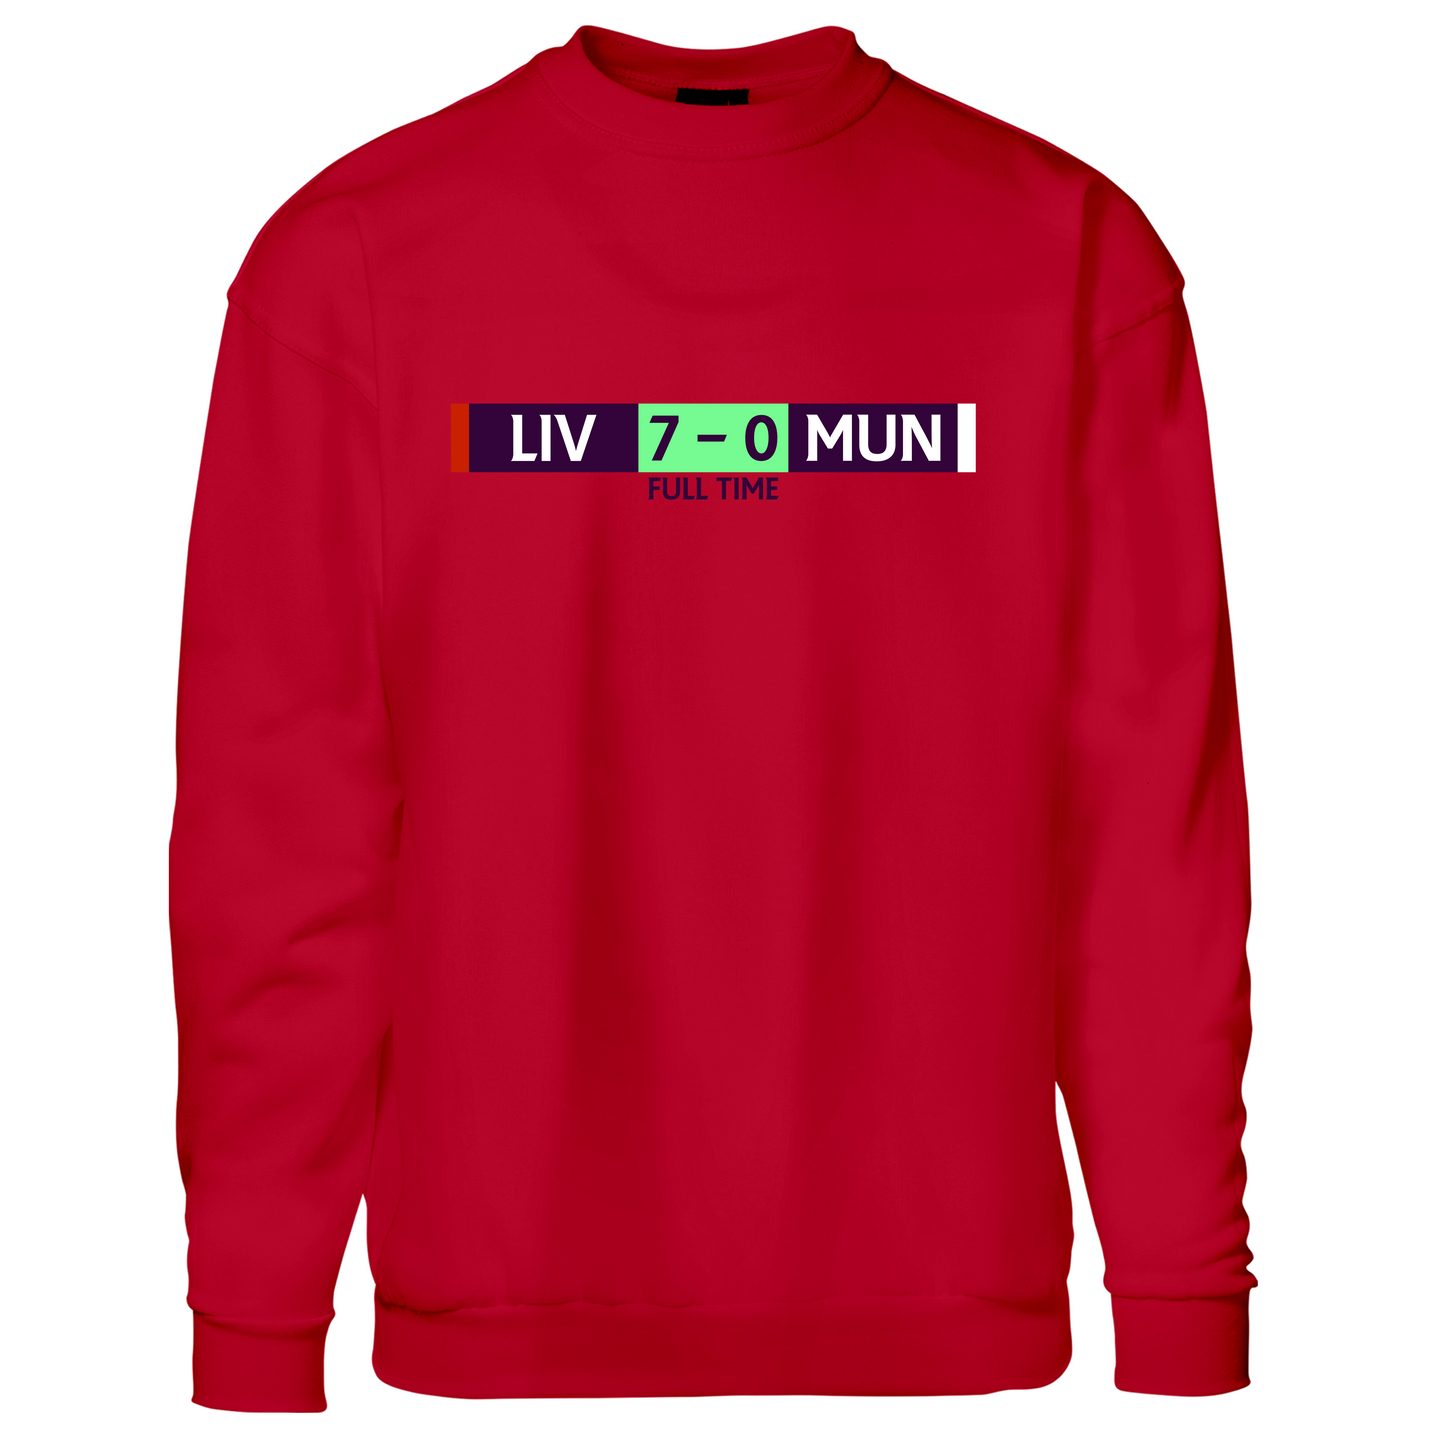 LIV 7-0 MUN - Sweatshirt